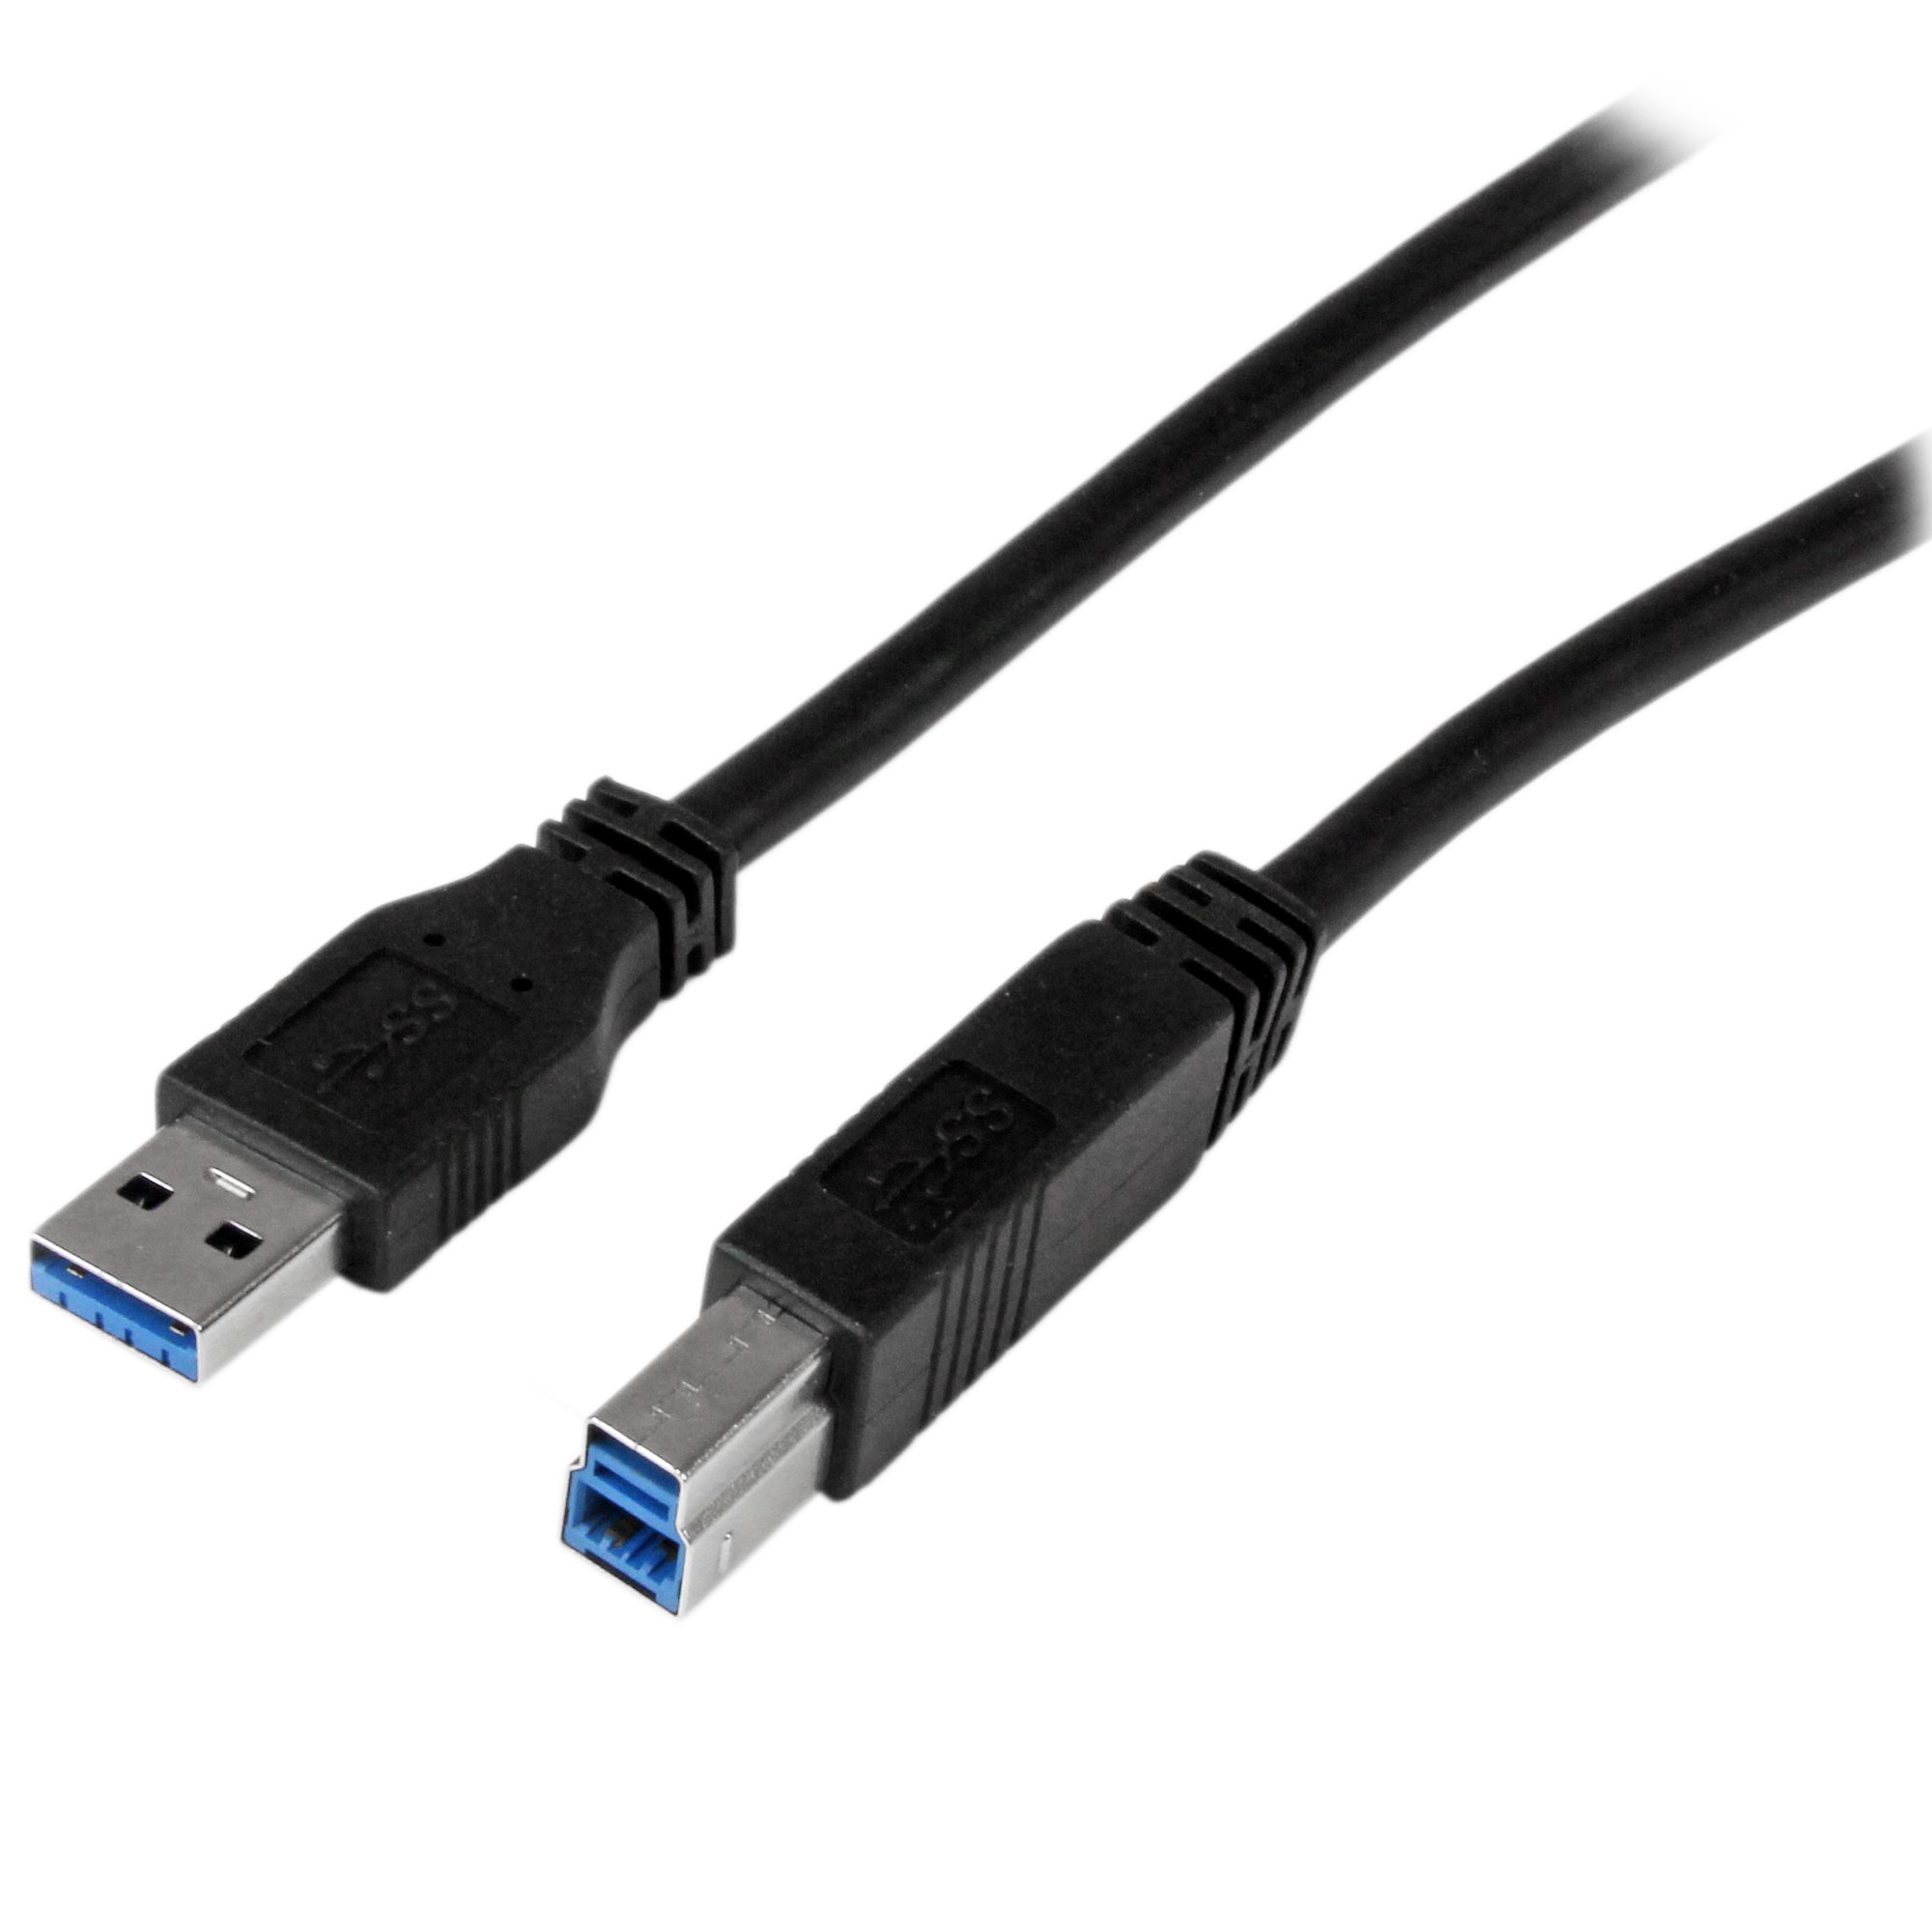 Belastingen bende Site lijn 1m 3 ft Certified USB 3.0 A to B Cable - USB 3.0 Cables | StarTech.com